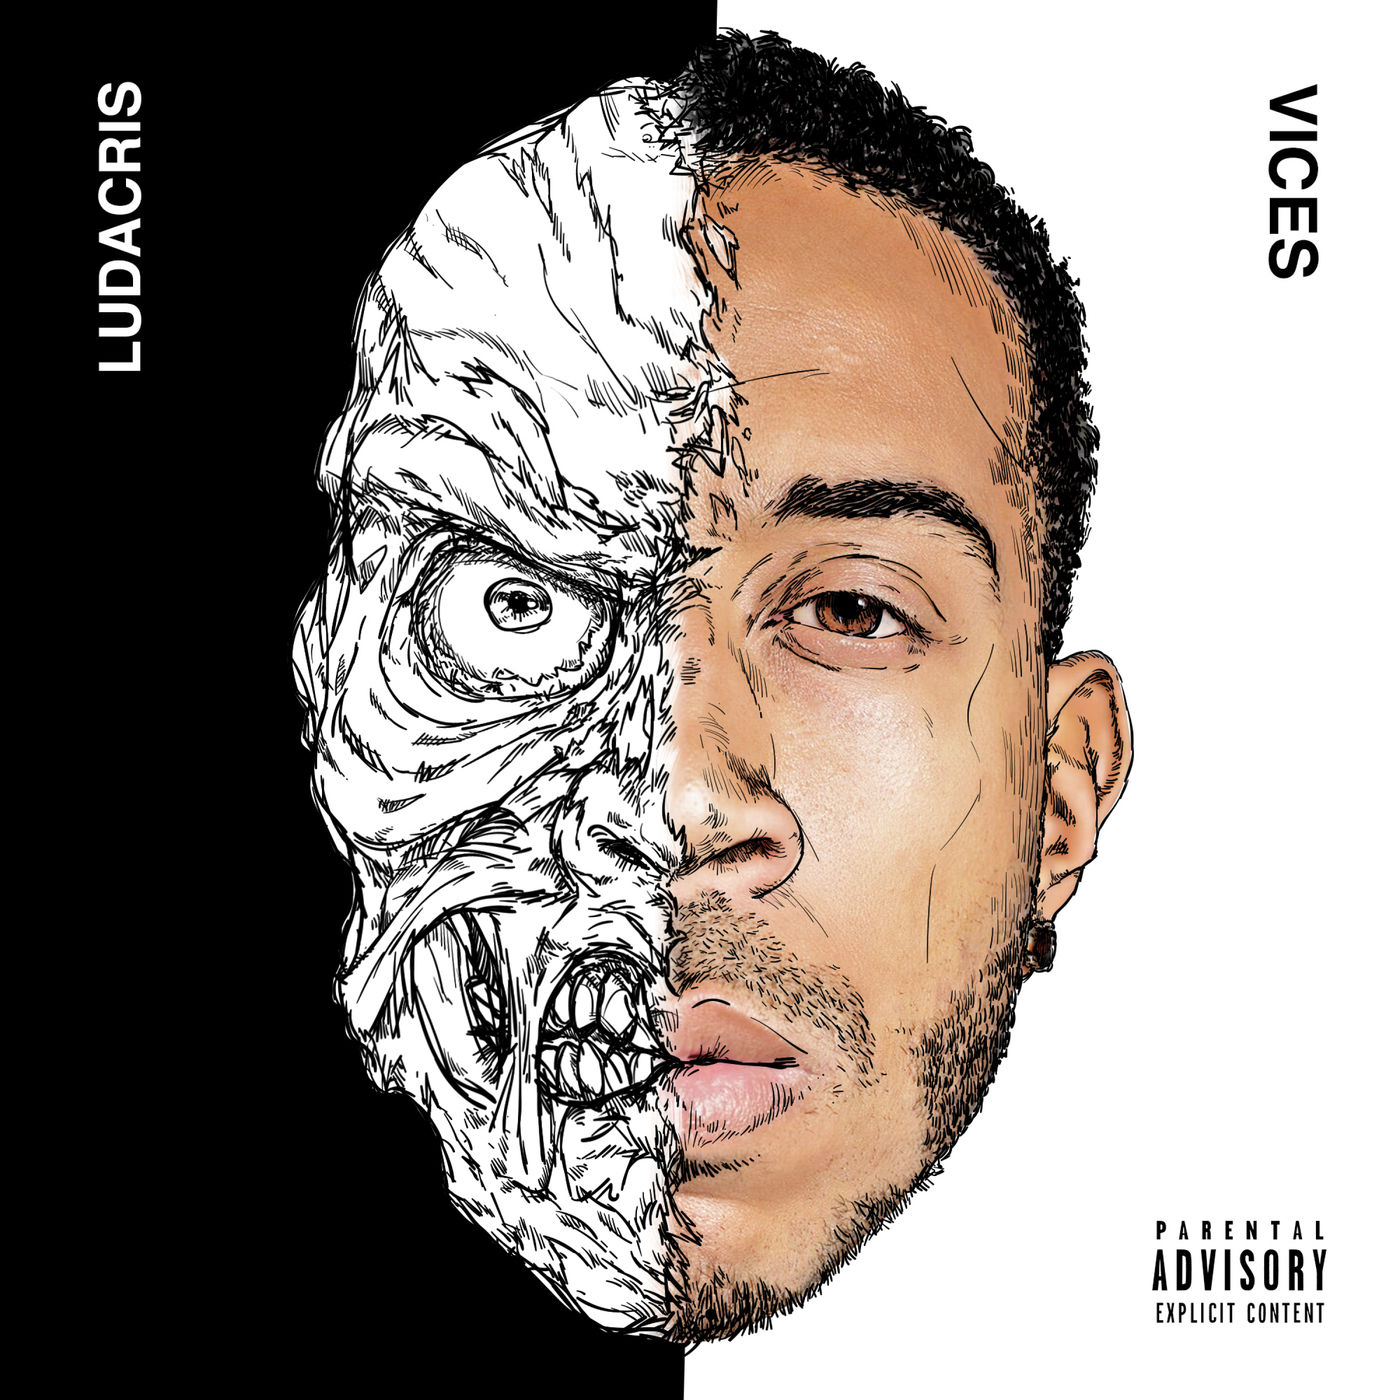 New Music: Ludacris – “Vices” [LISTEN]